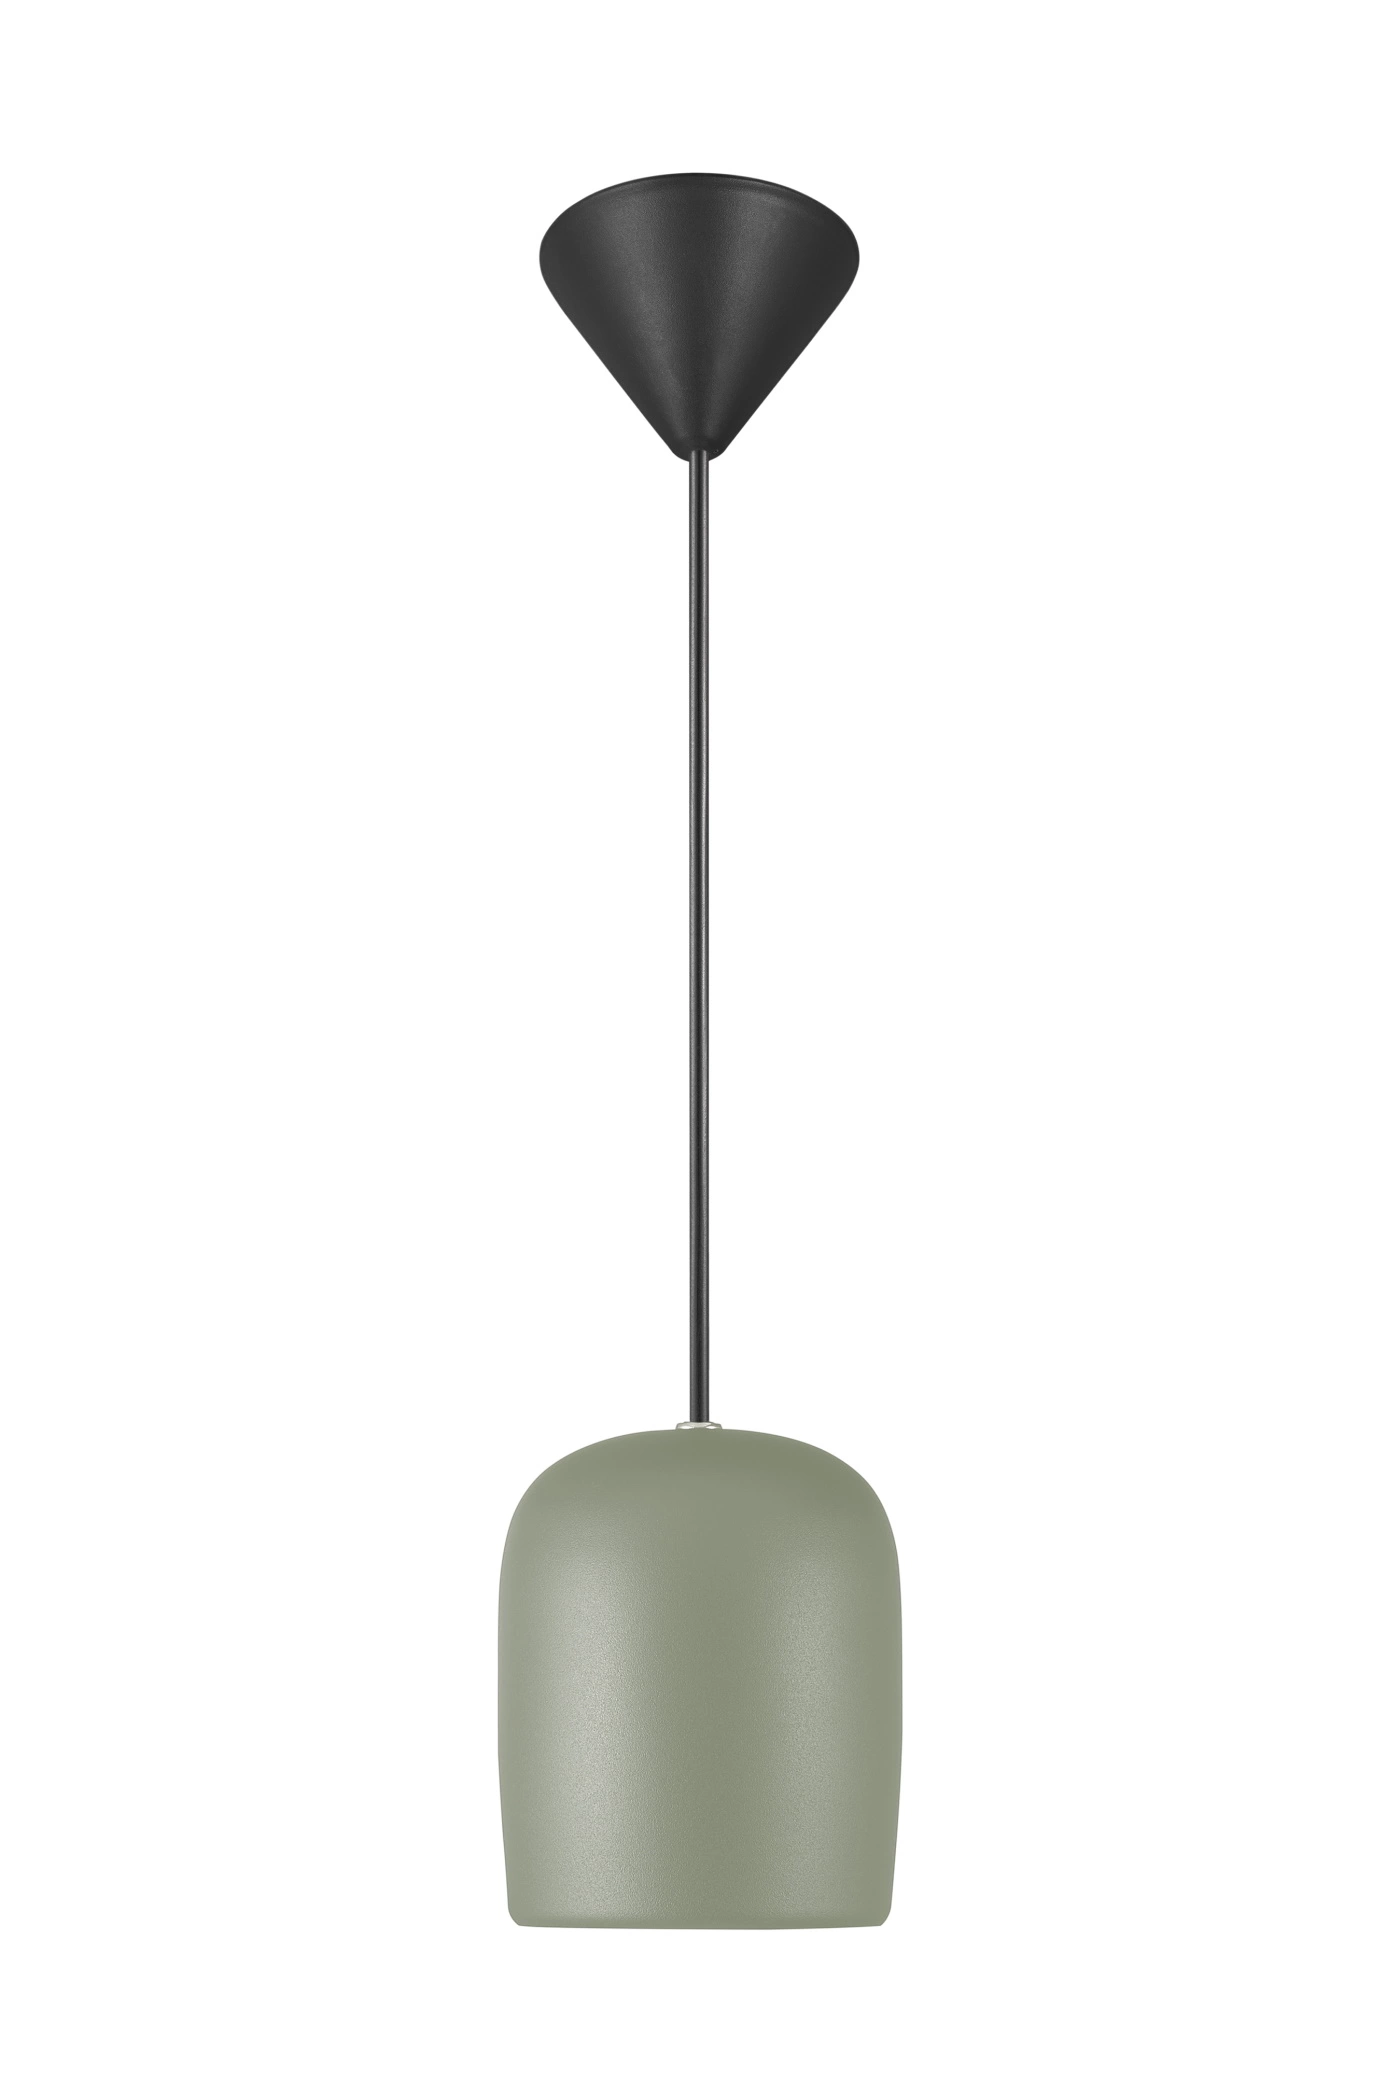   
                        
                        Люстра NORDLUX (Дания) 51273    
                         в стиле Скандинавский, Модерн.  
                        Тип источника света: светодиодная лампа, сменная.                         Форма: Круг.                         Цвета плафонов и подвесок: Зеленый.                         Материал: Металл.                          фото 1